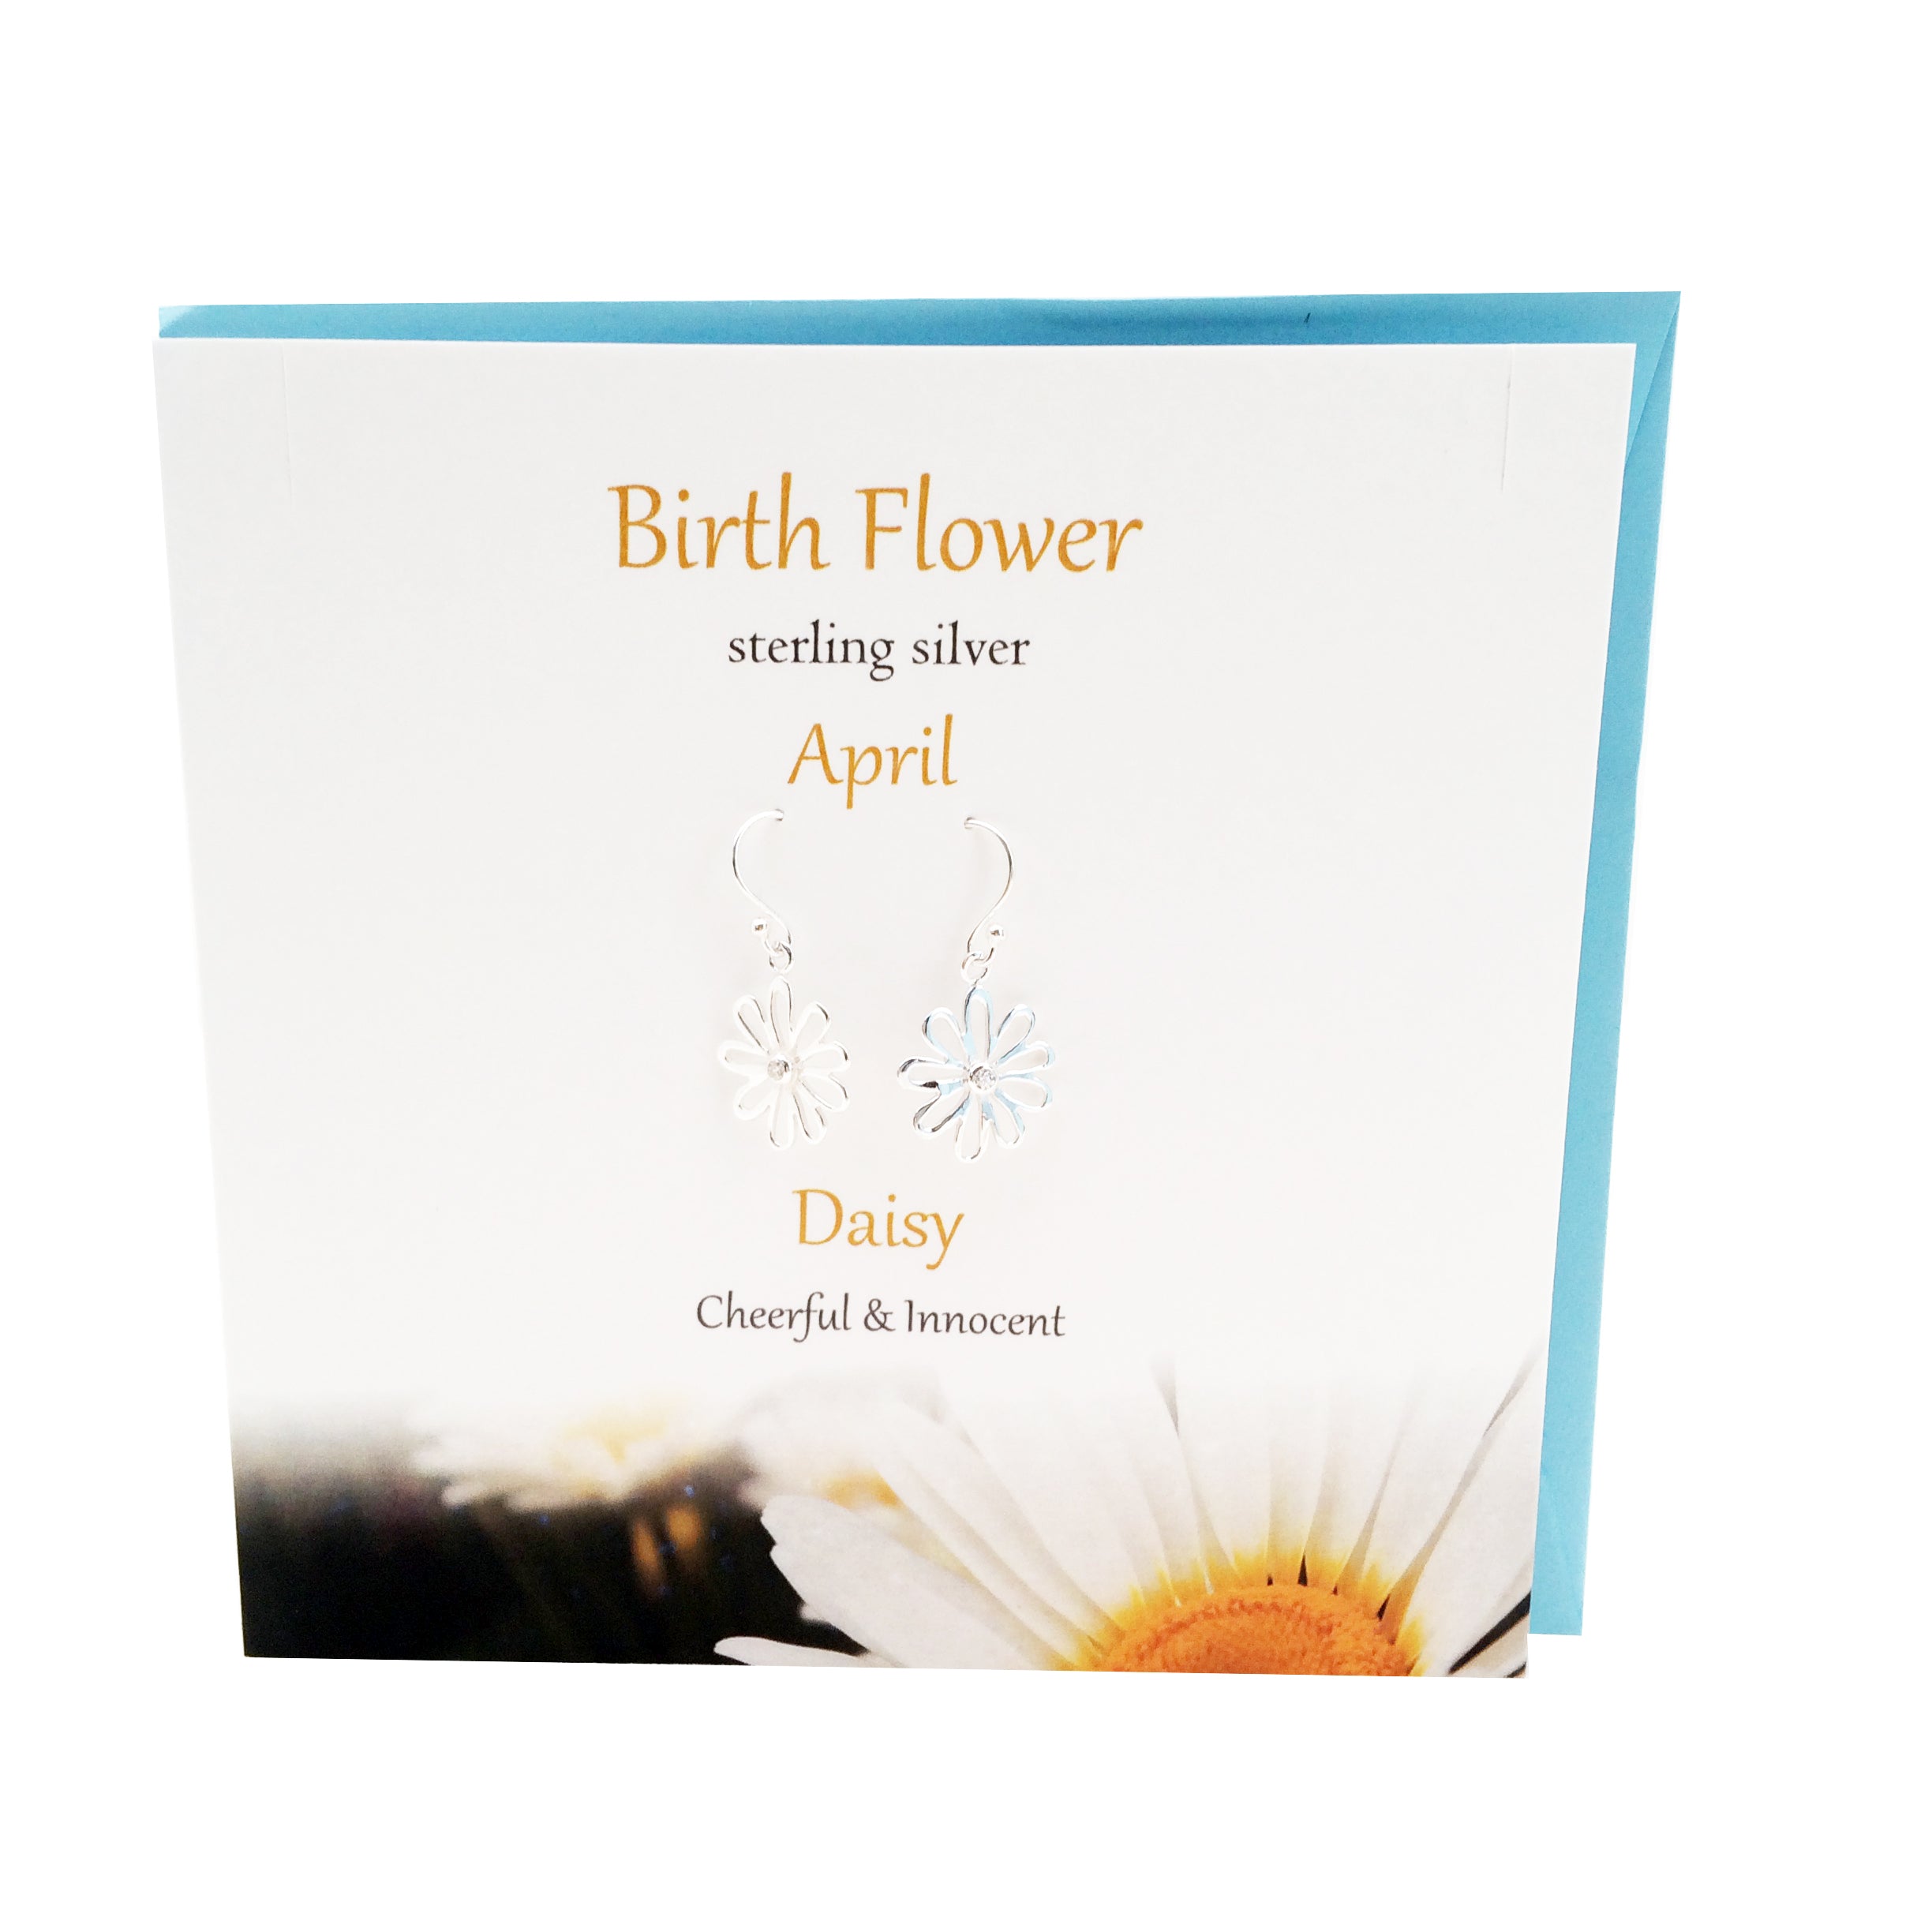 Birth Flower April silver earrings |Daisy | The Silver Studio